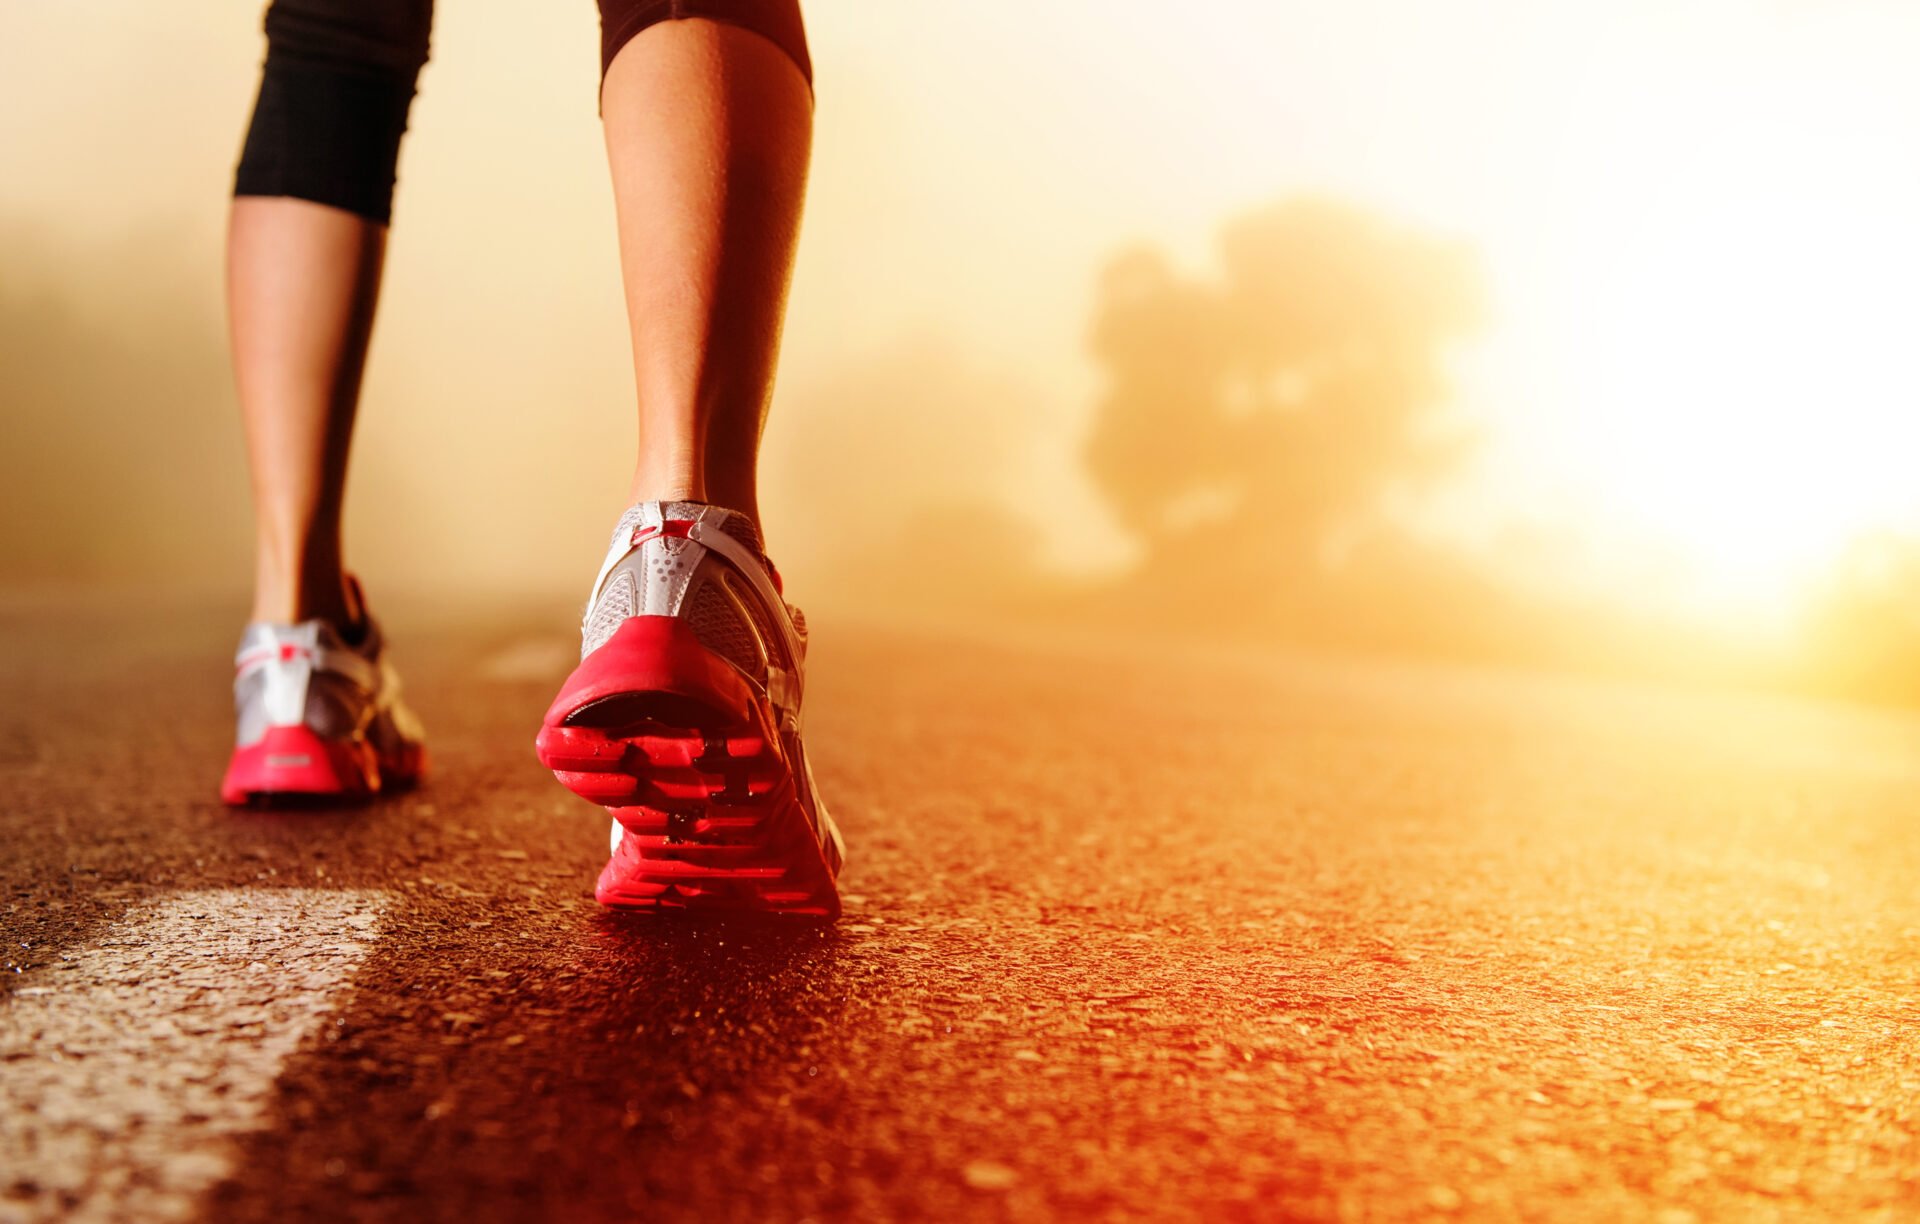 Athlete runner feet running on road closeup on shoe. woman fitness sunrise jog workout 